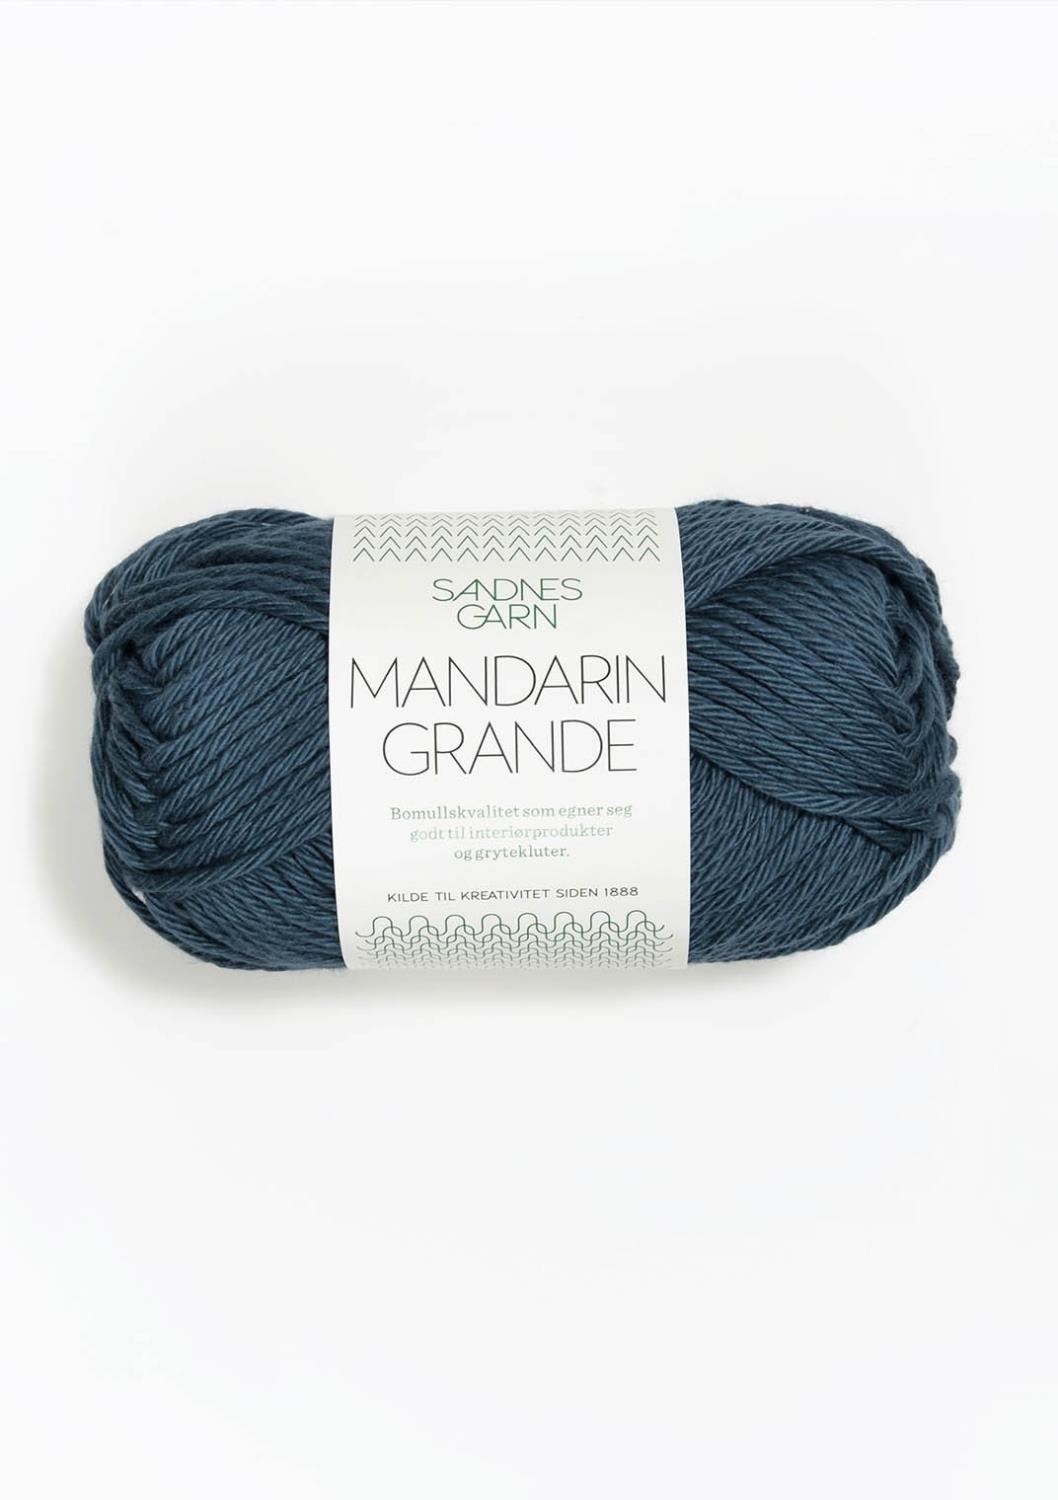 Mandarin Grande Sandnes 6364 - Mørk Blå